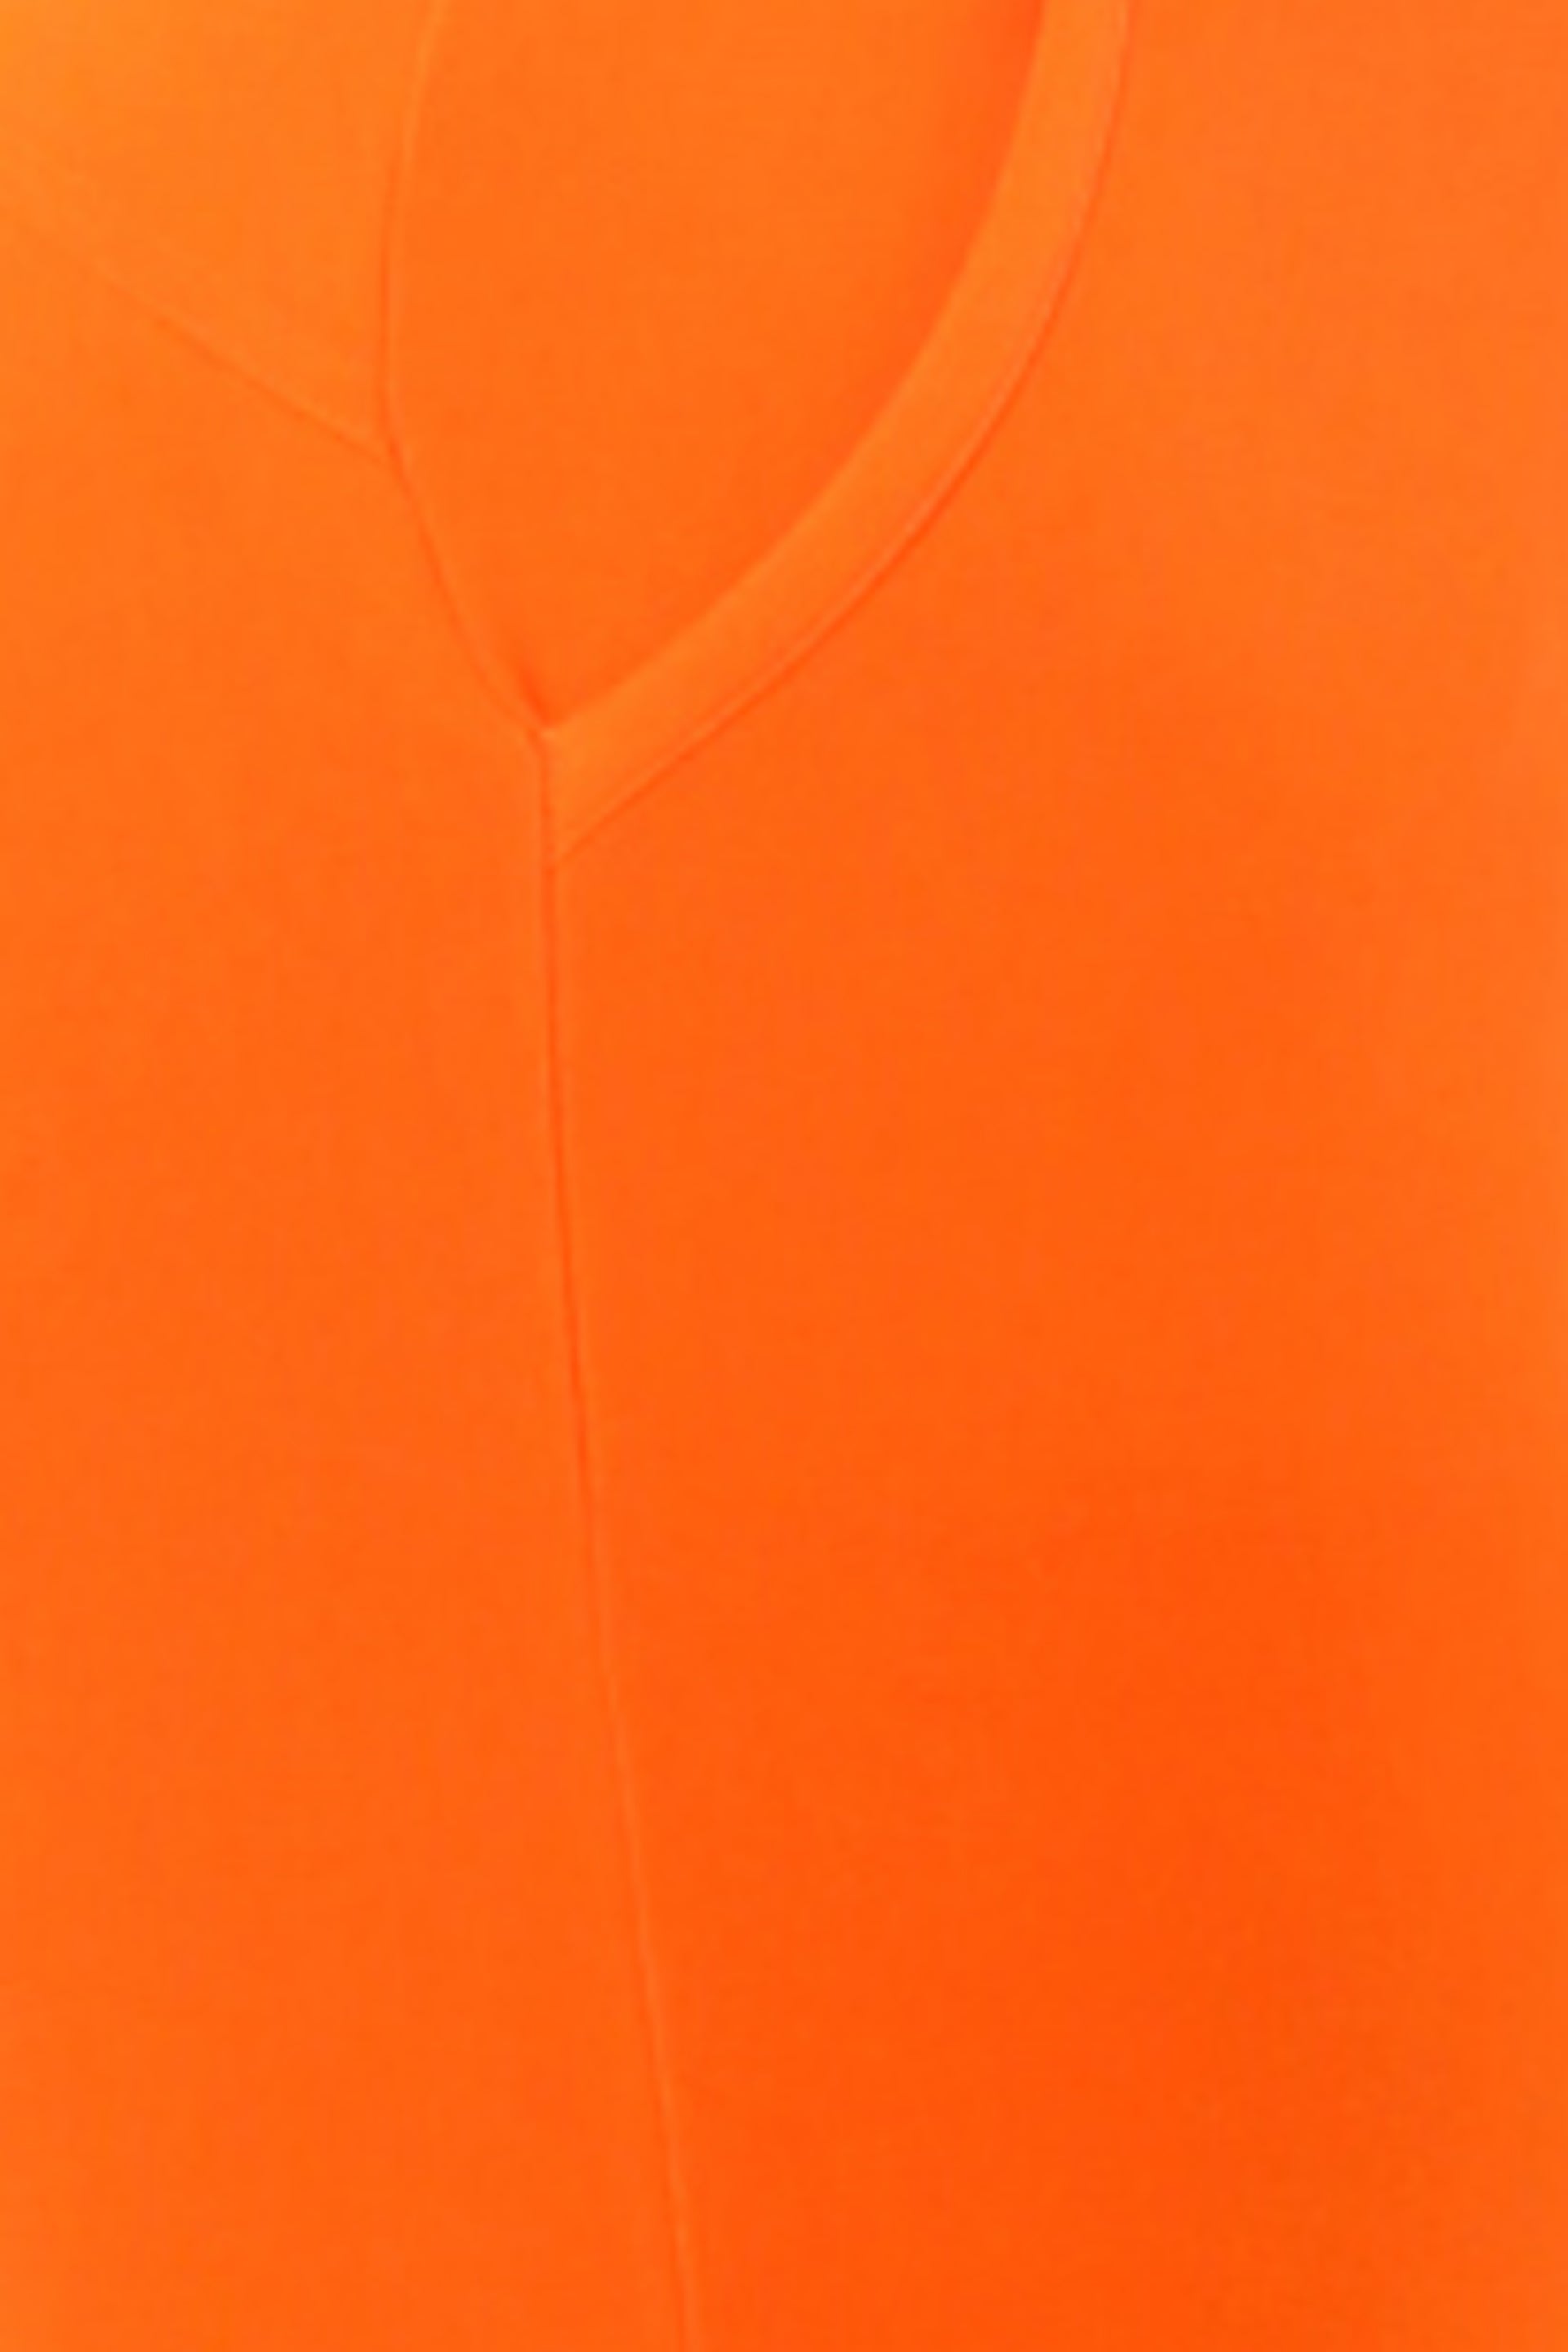 Plus Size Tummy Control Sculpting Treggings - Orange - SHOSHO Fashion